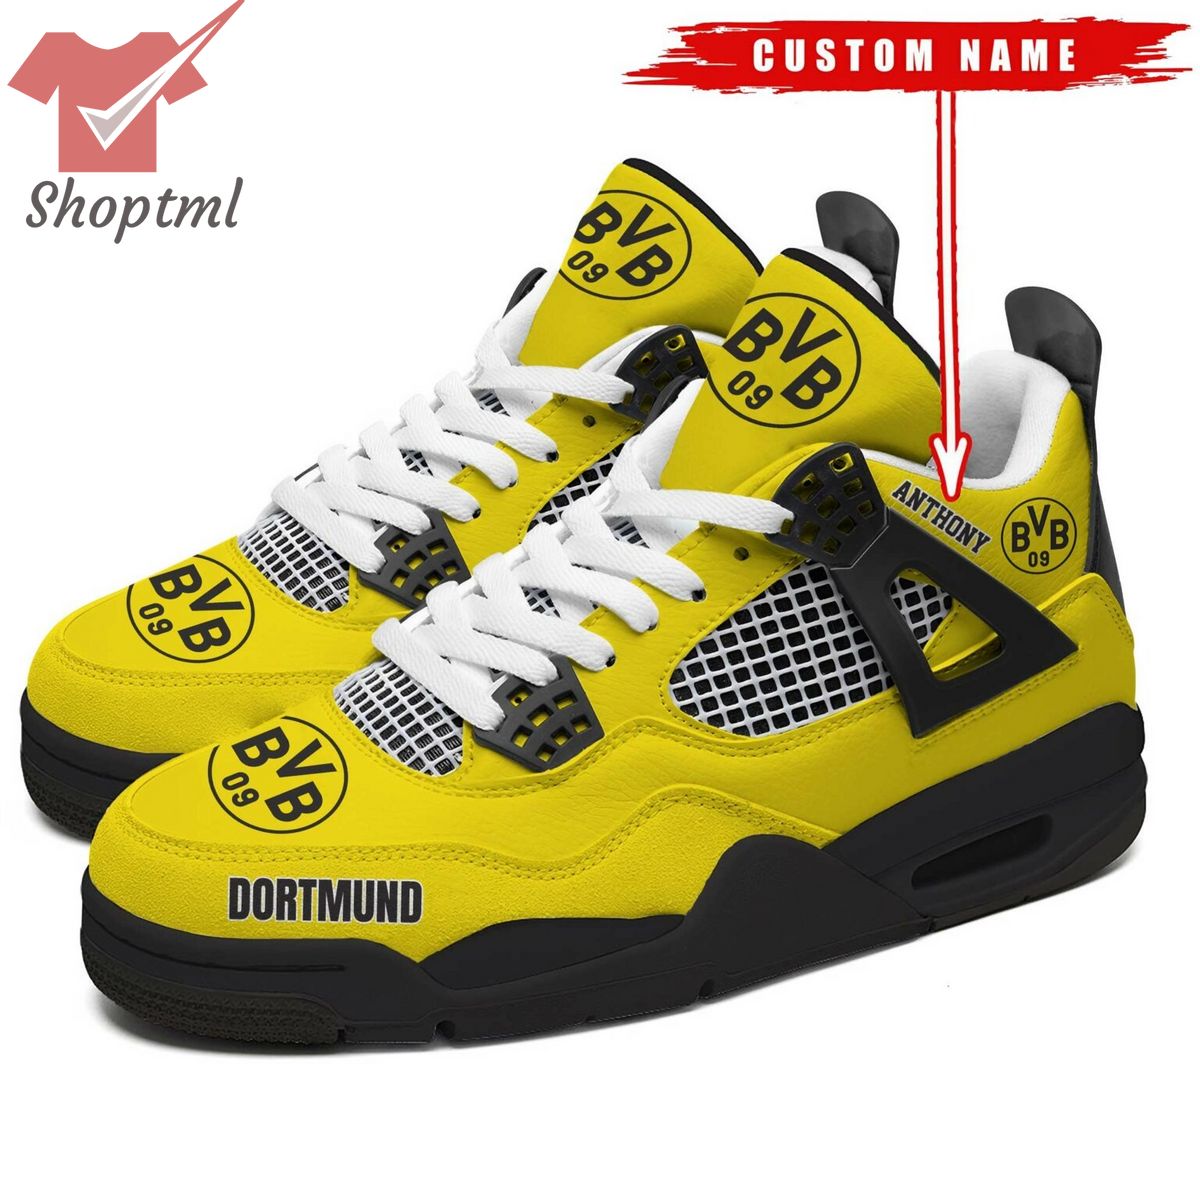 Borussia Dortmund Personalized AJ4 Air Jordan 4 Sneaker